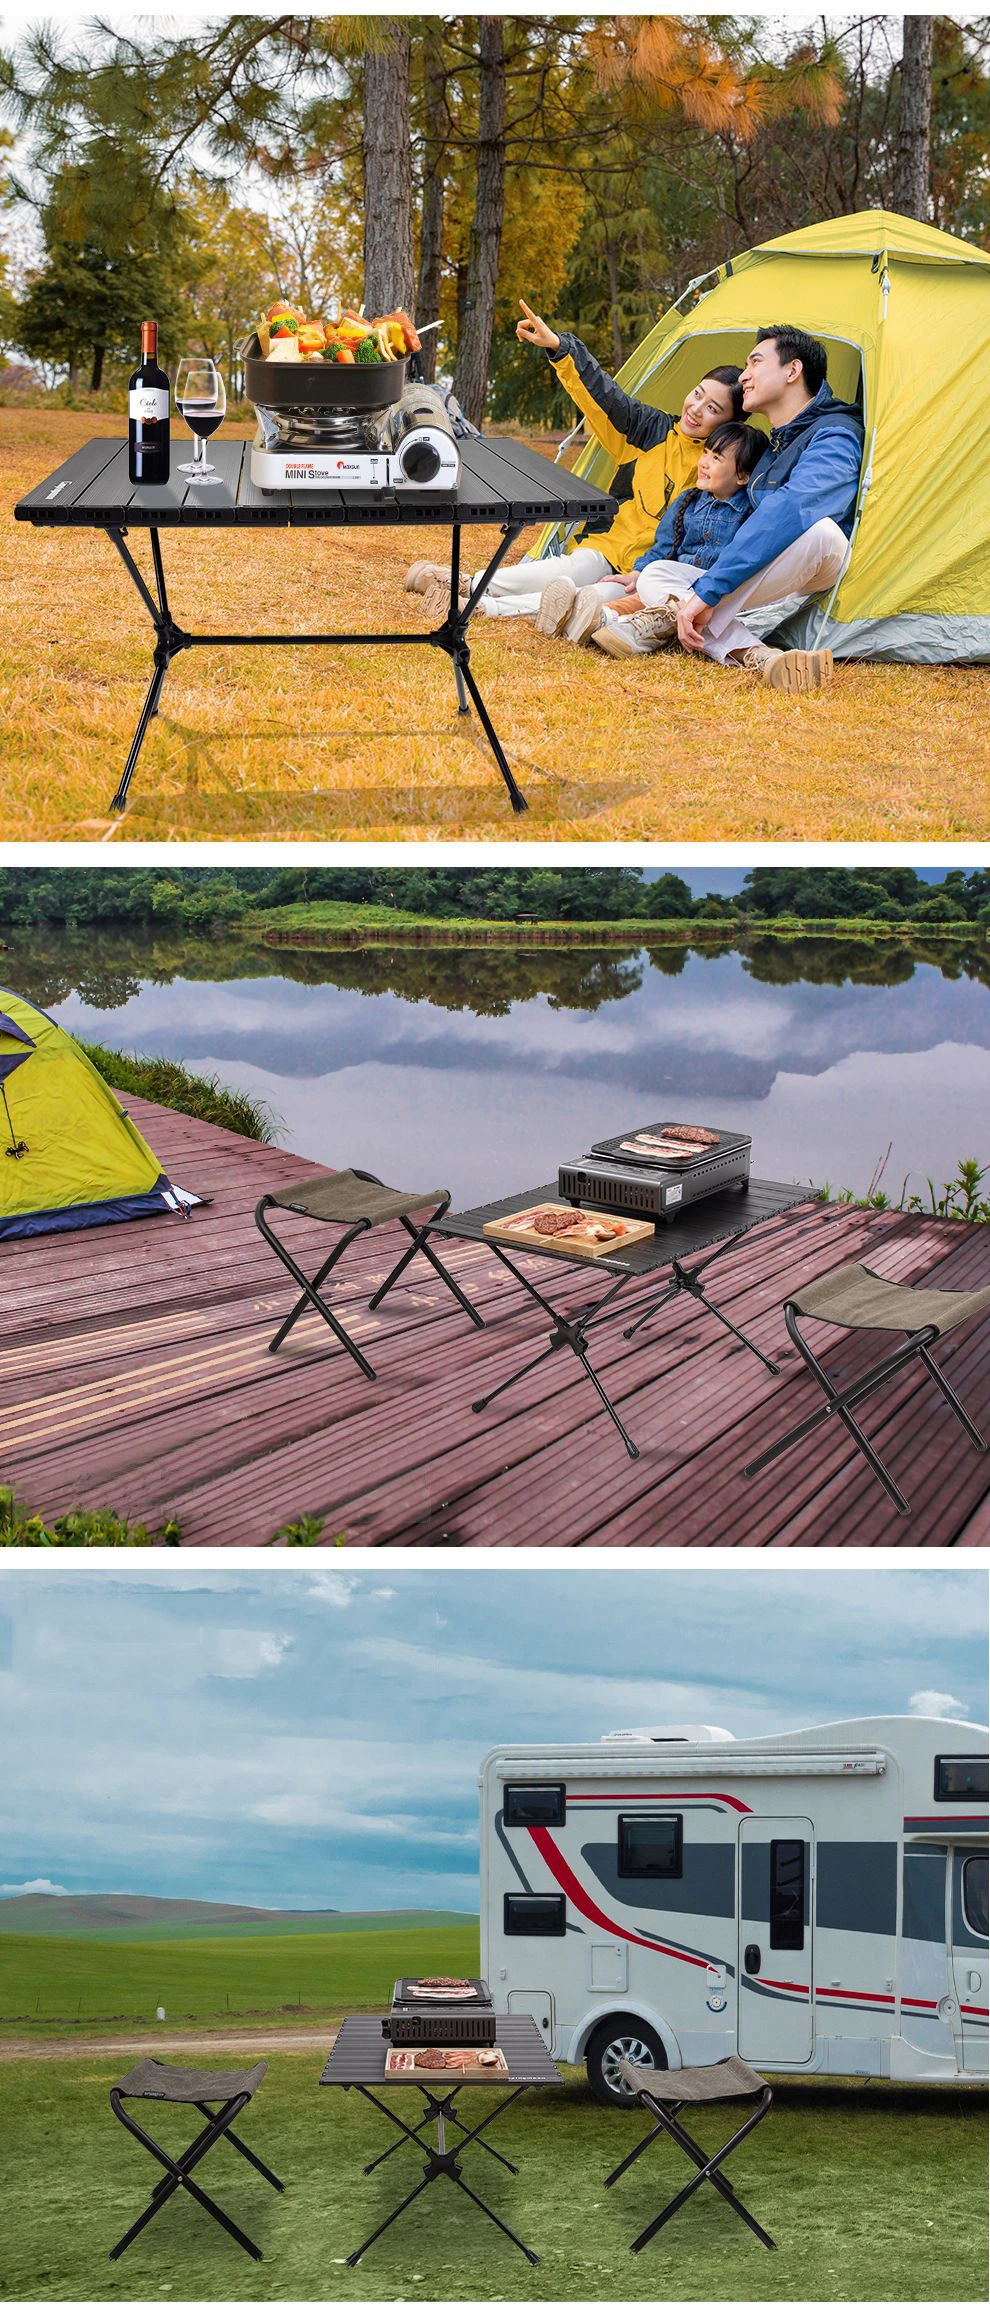 Aluminum Alloy Multiple Models Tourism Mesa De Camping Outdoor BBQ Picnic Portable Foldable Folding Fishing Camping Table